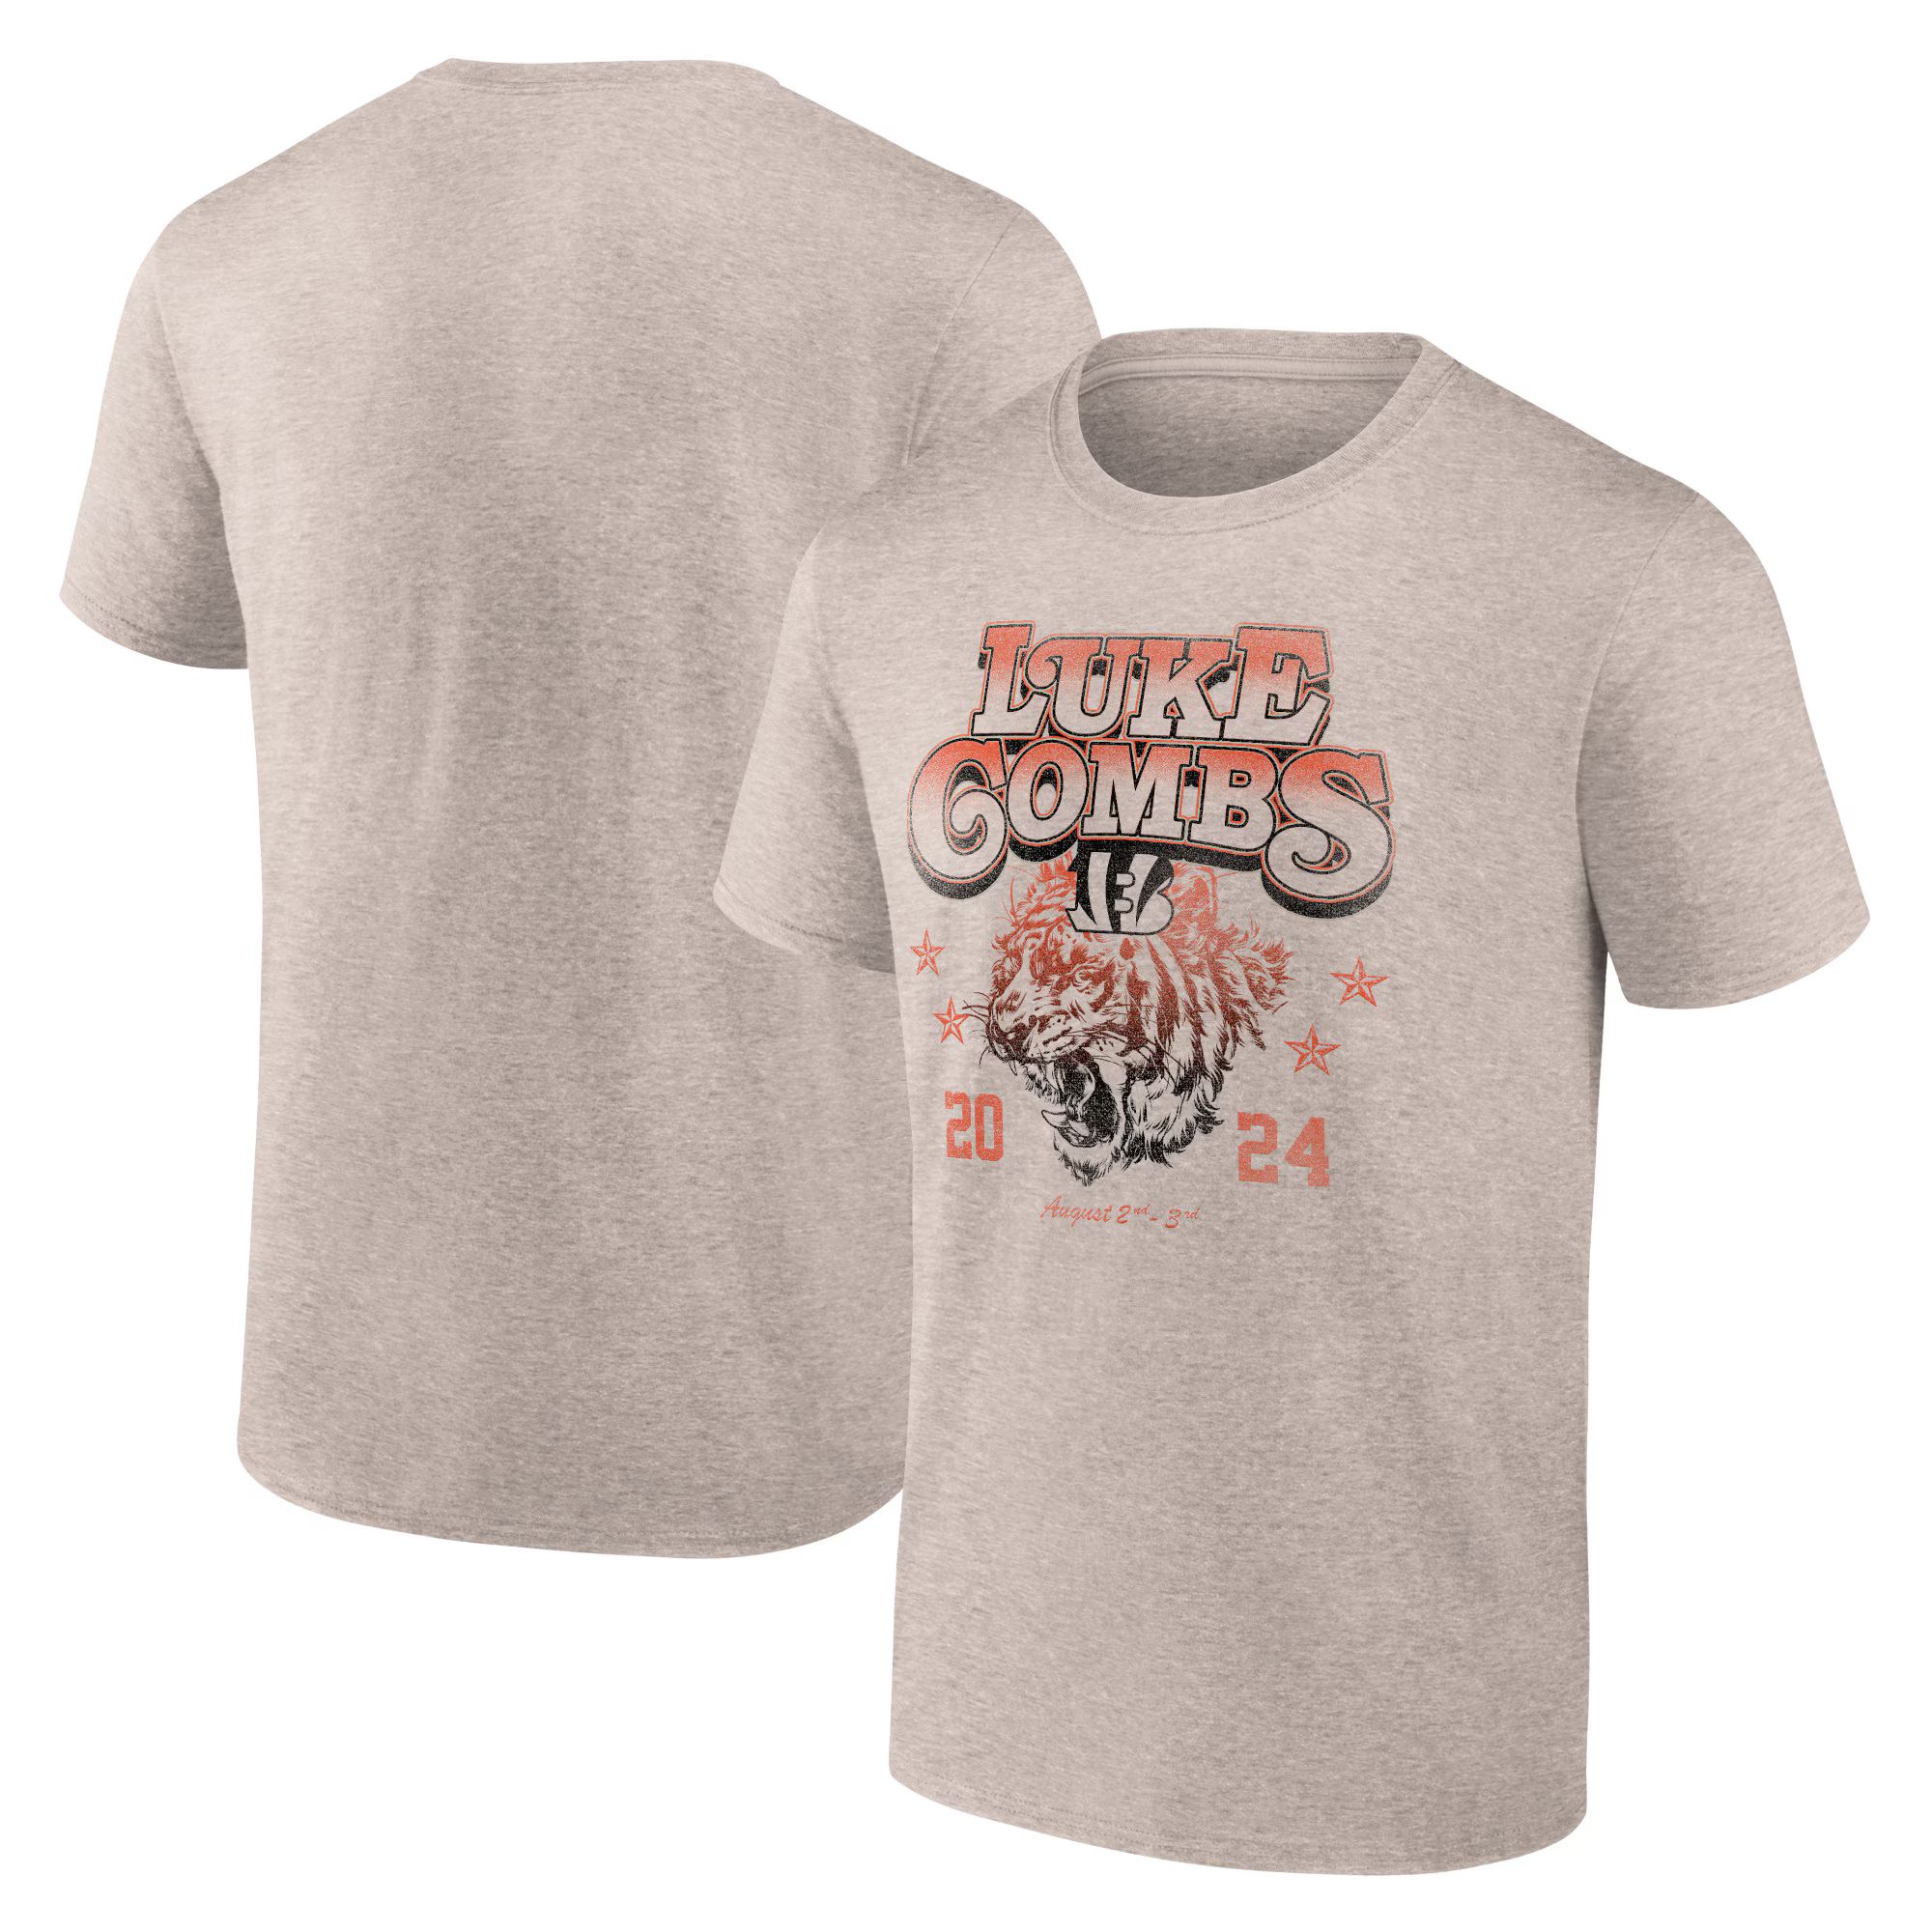 Luke Combs x Cincinnati Bengals Fanatics Branded Growin' Up and Gettin' Old Tour T-Shirt - Tan | Fanatics